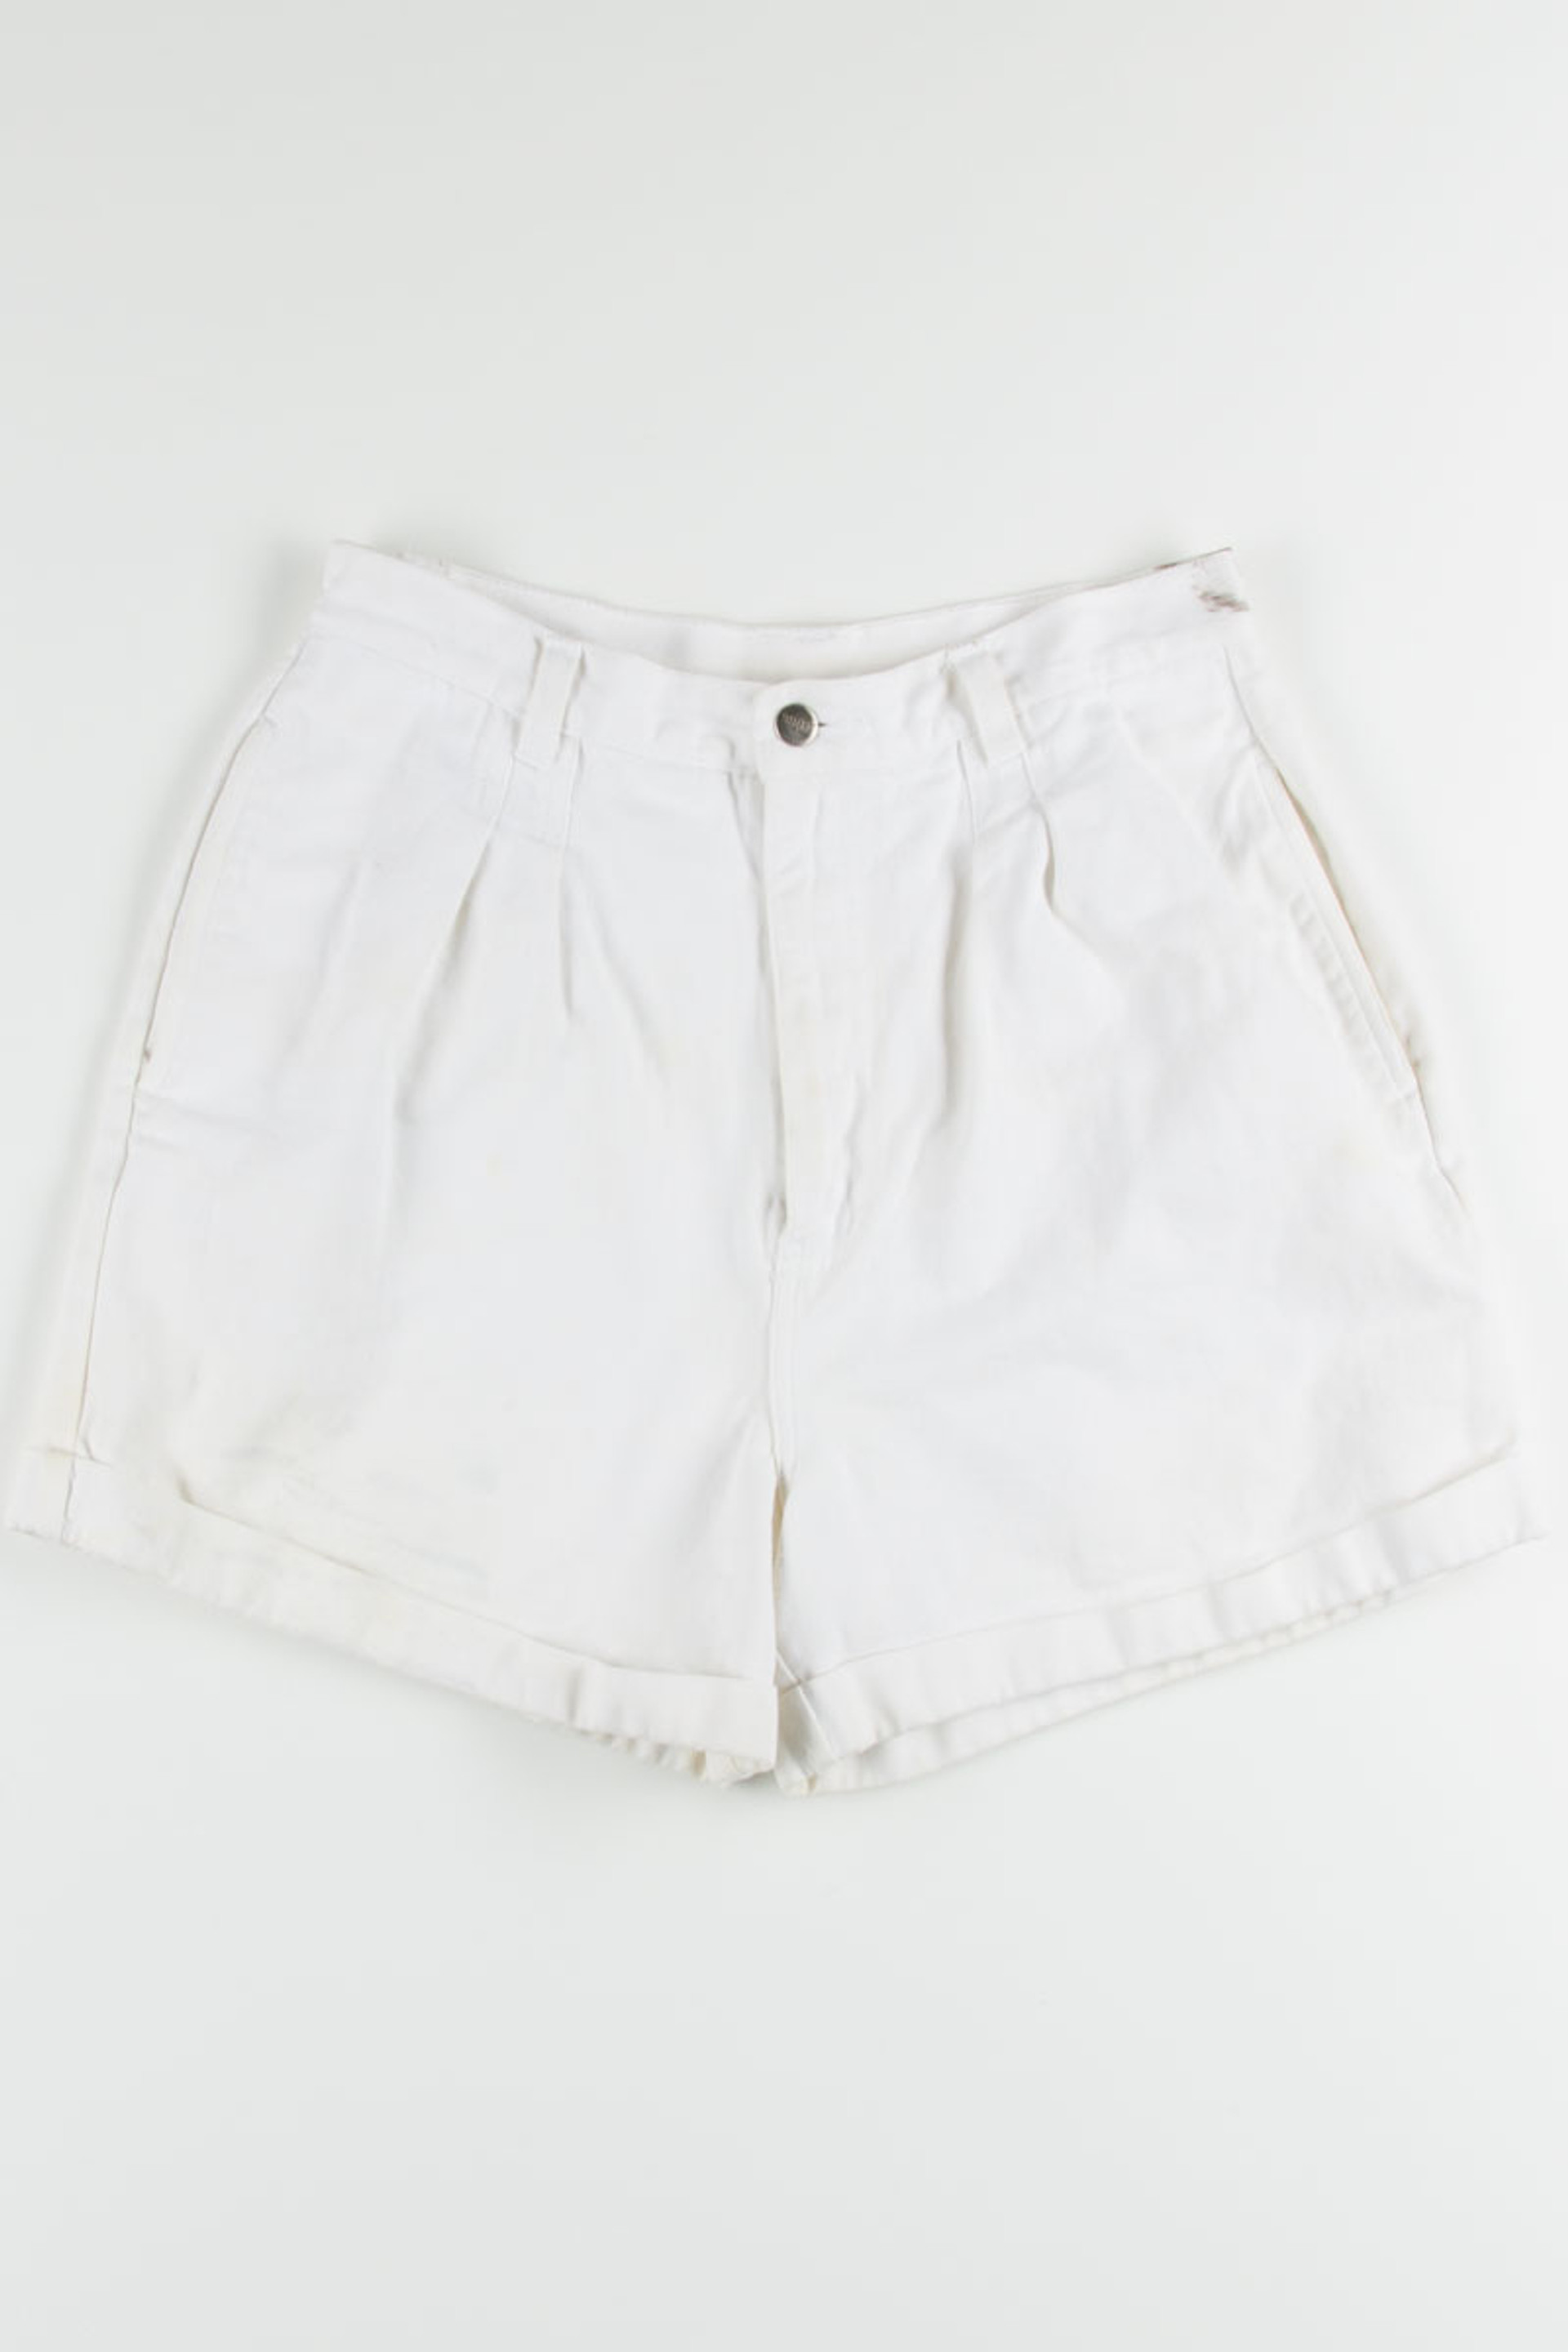 Women's Vintage Denim Shorts 342 (sz. 14) - Ragstock.com